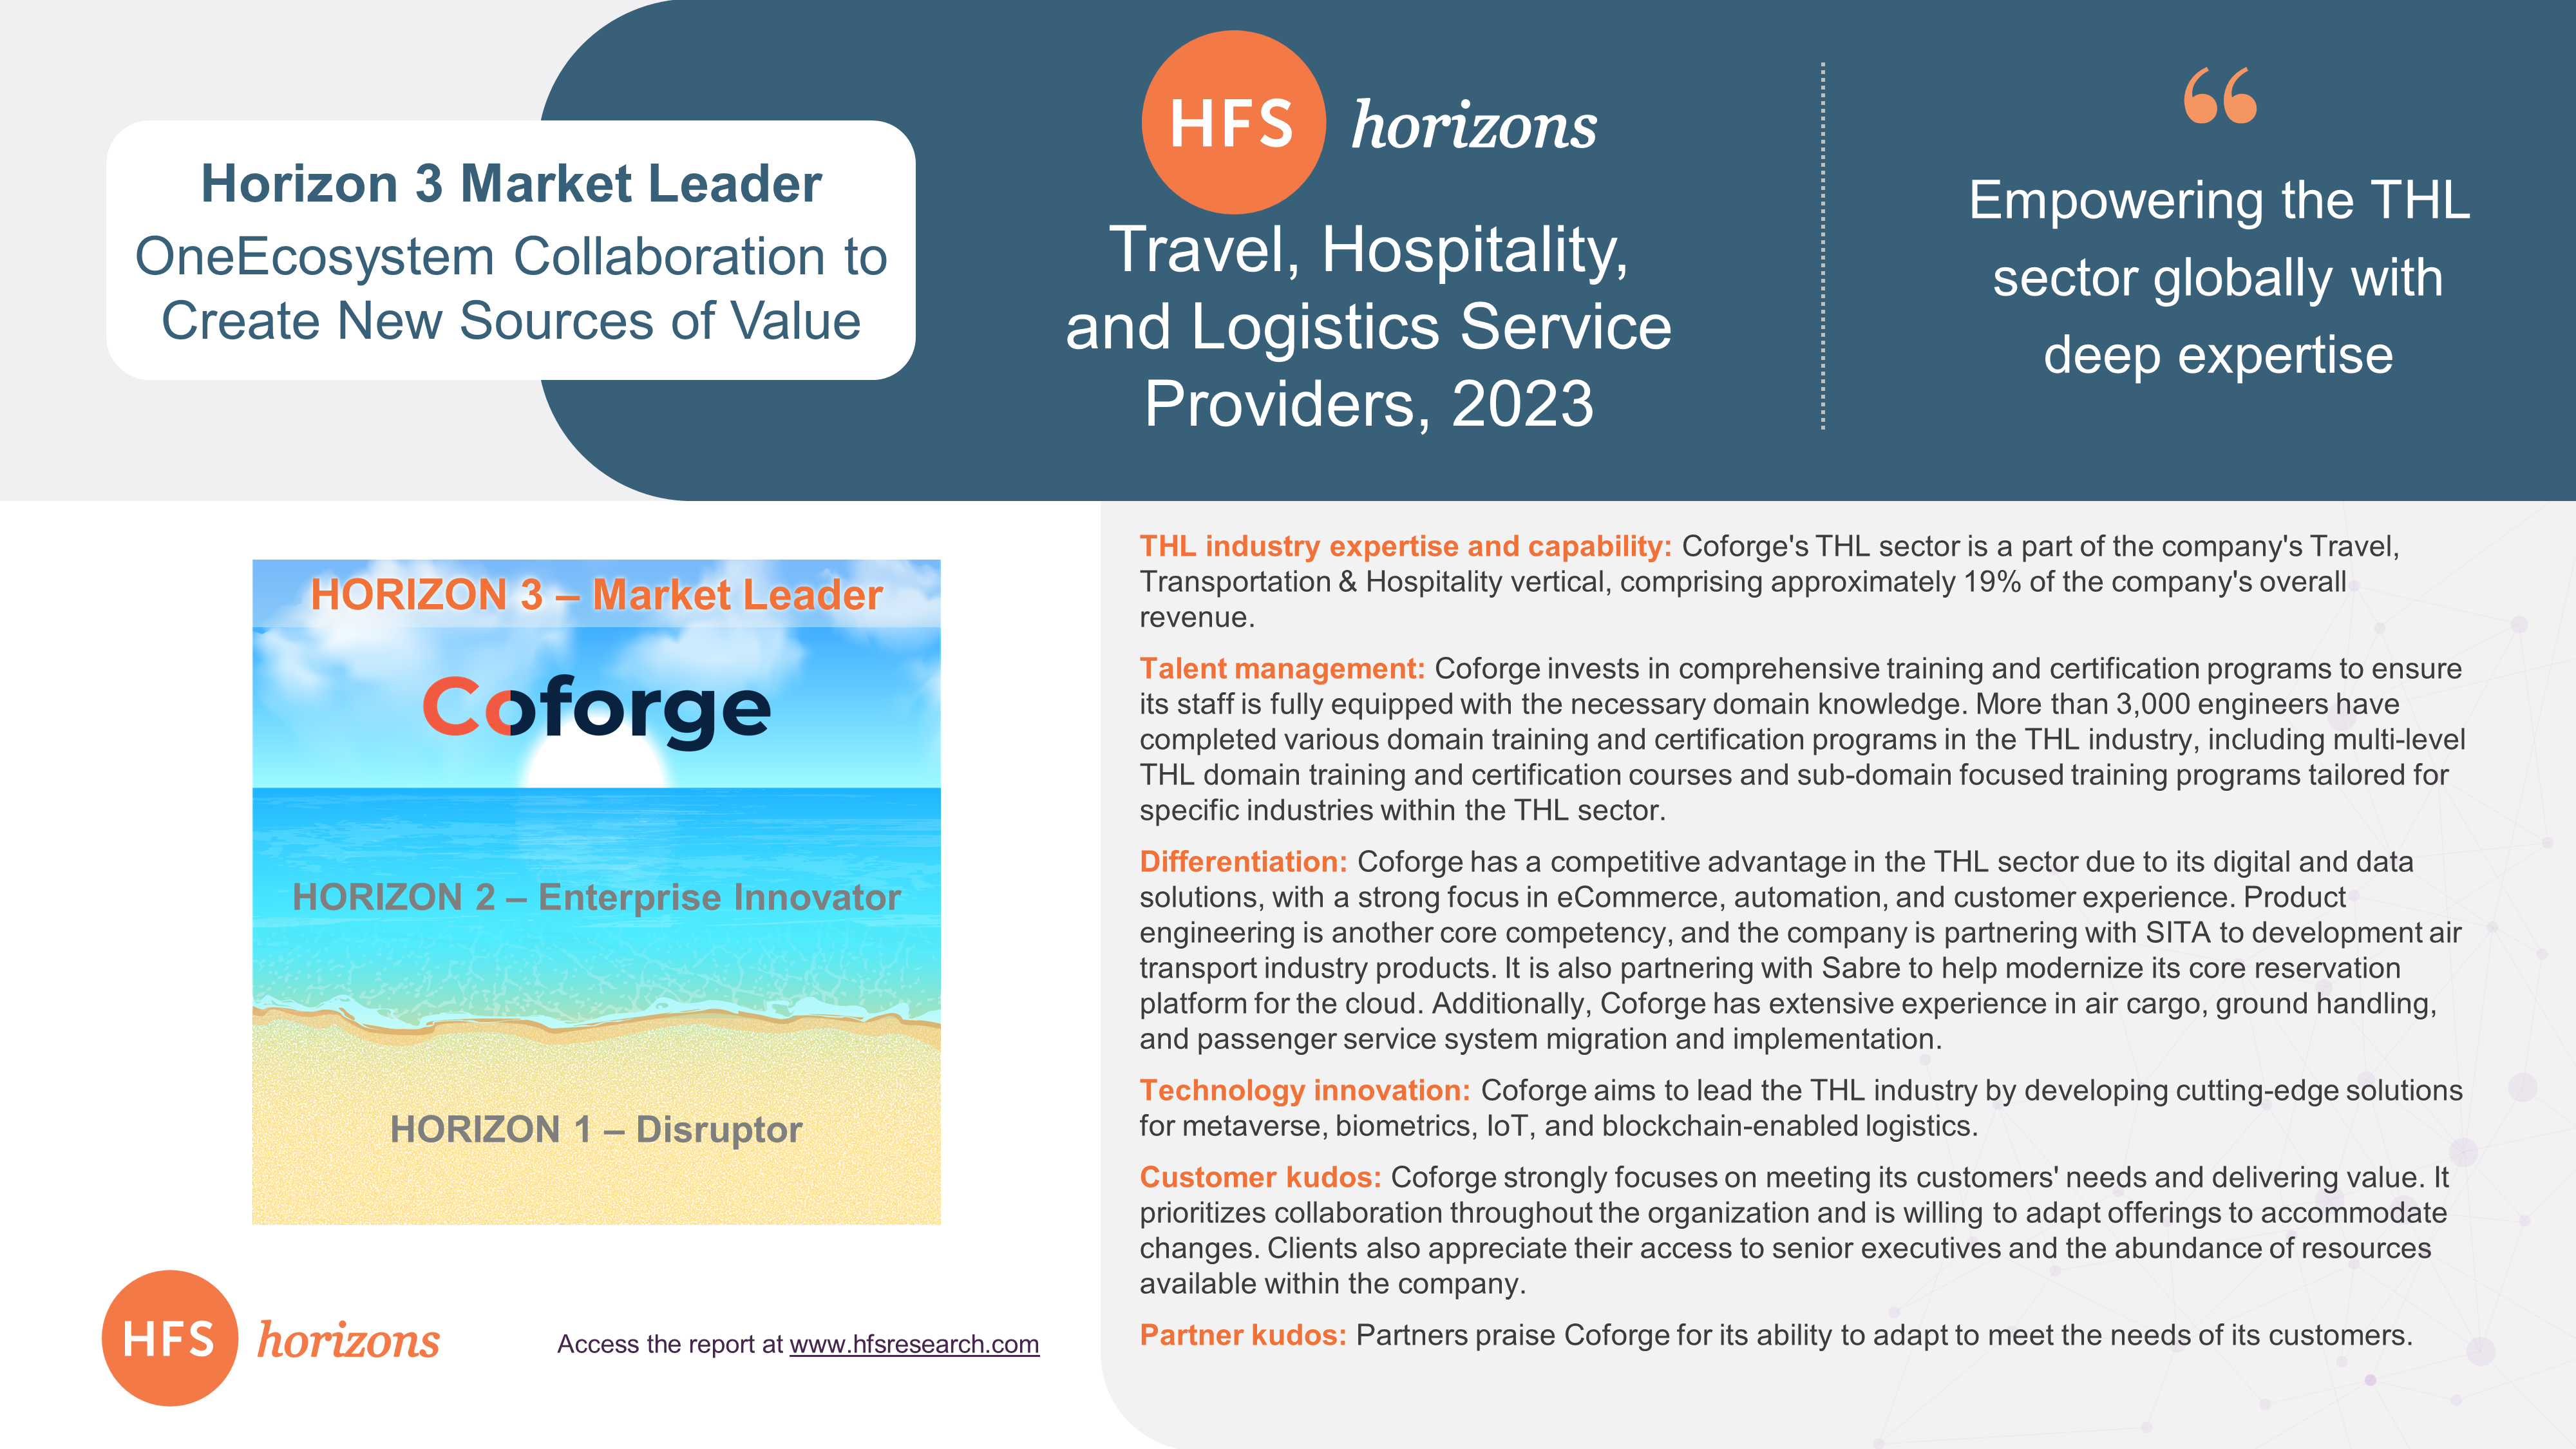 Infographic-Coforge-HFS-Horizons-travel-hospitality-logistics-1